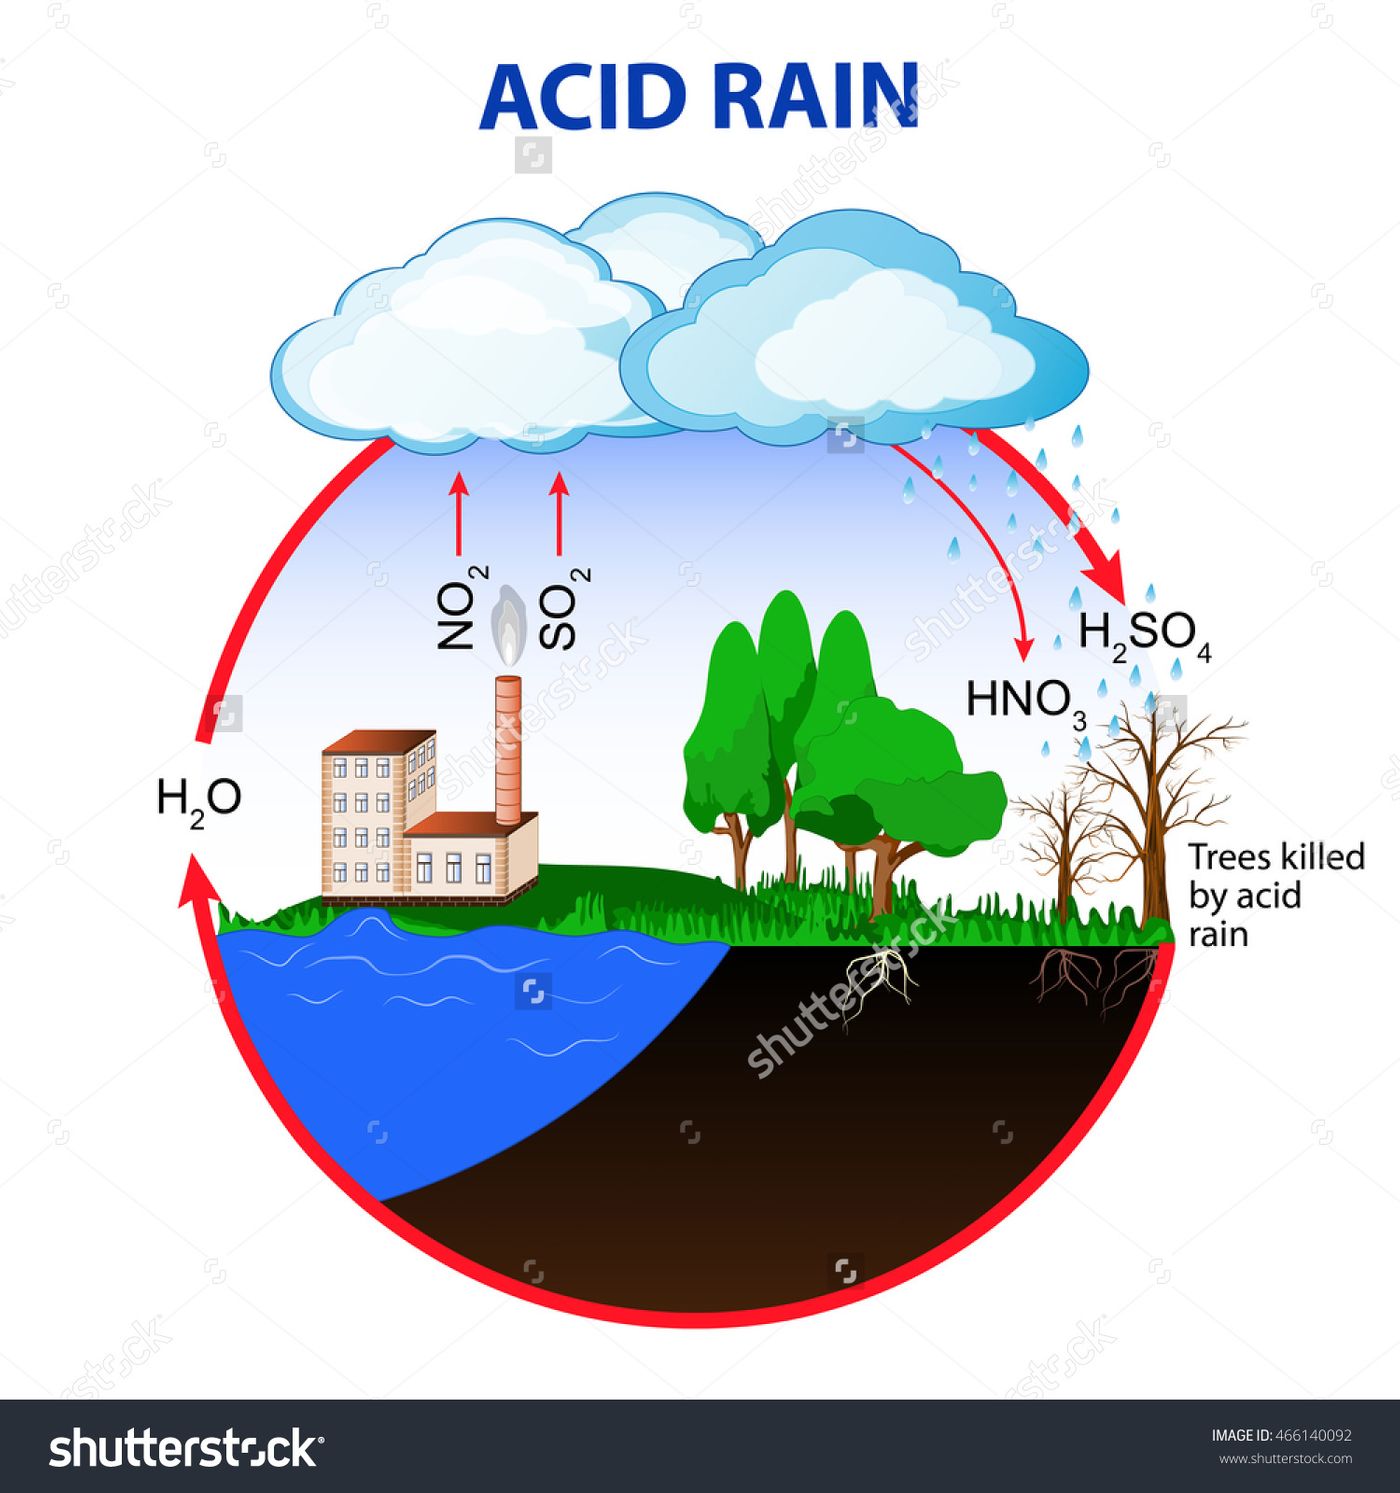 The cycle of acid rain. Photo: Shutterstock